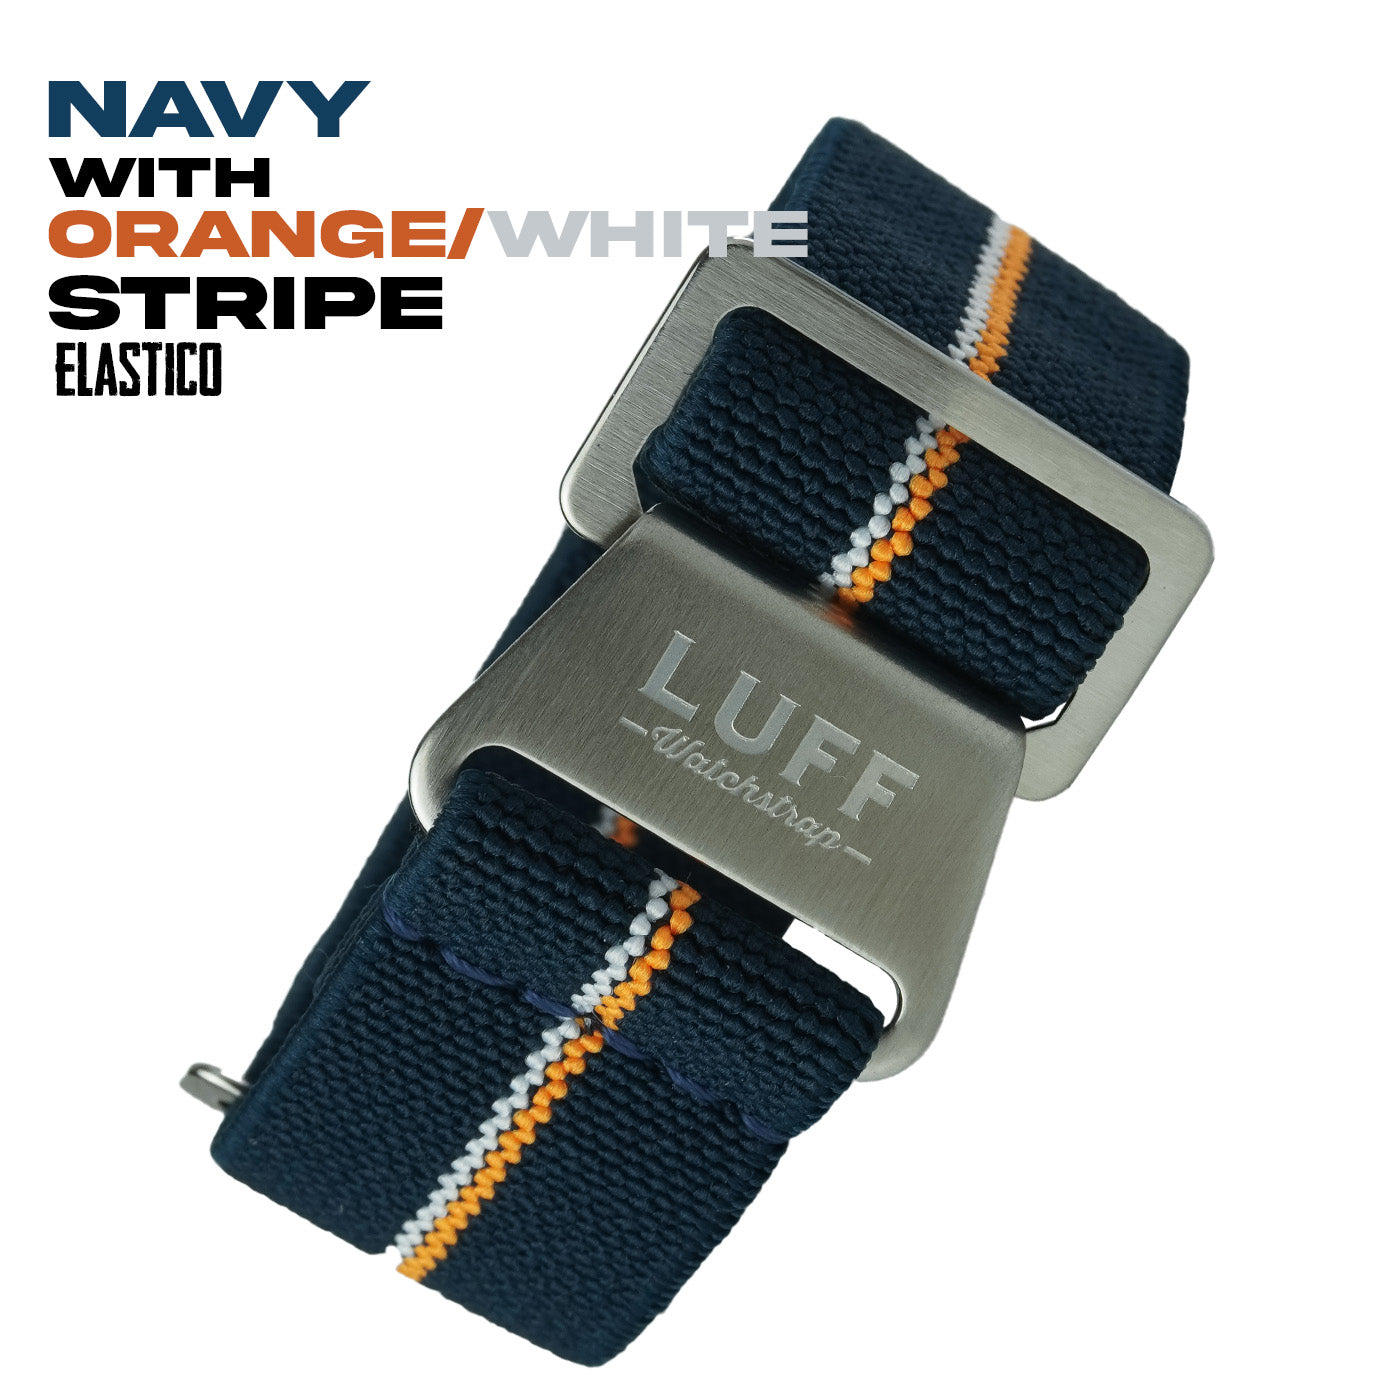 Navy with Orange/White Stripe (6904191844439)